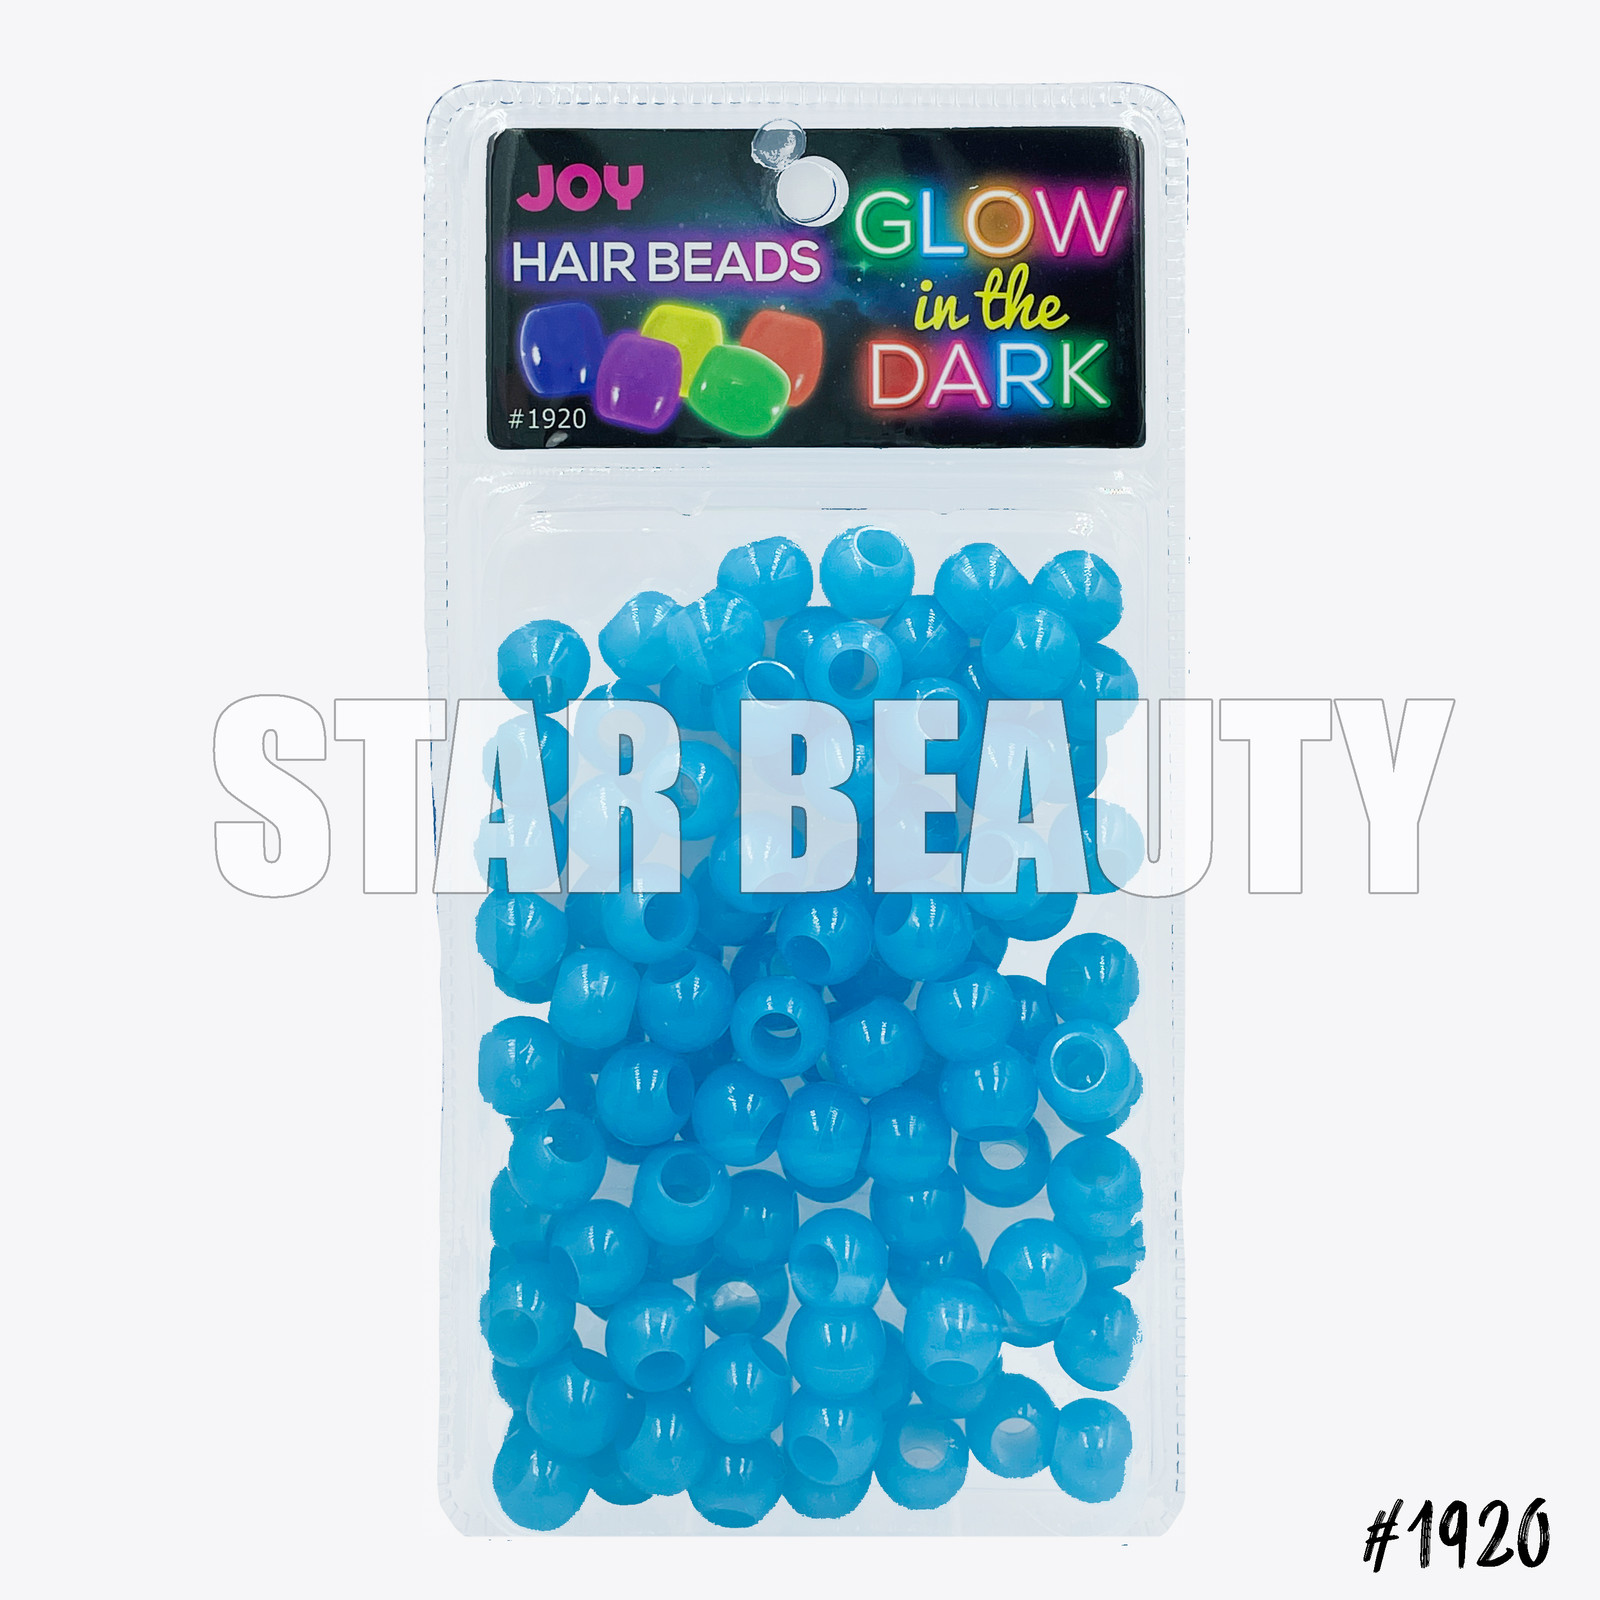 JOY Hair Beads Glow In The Dark